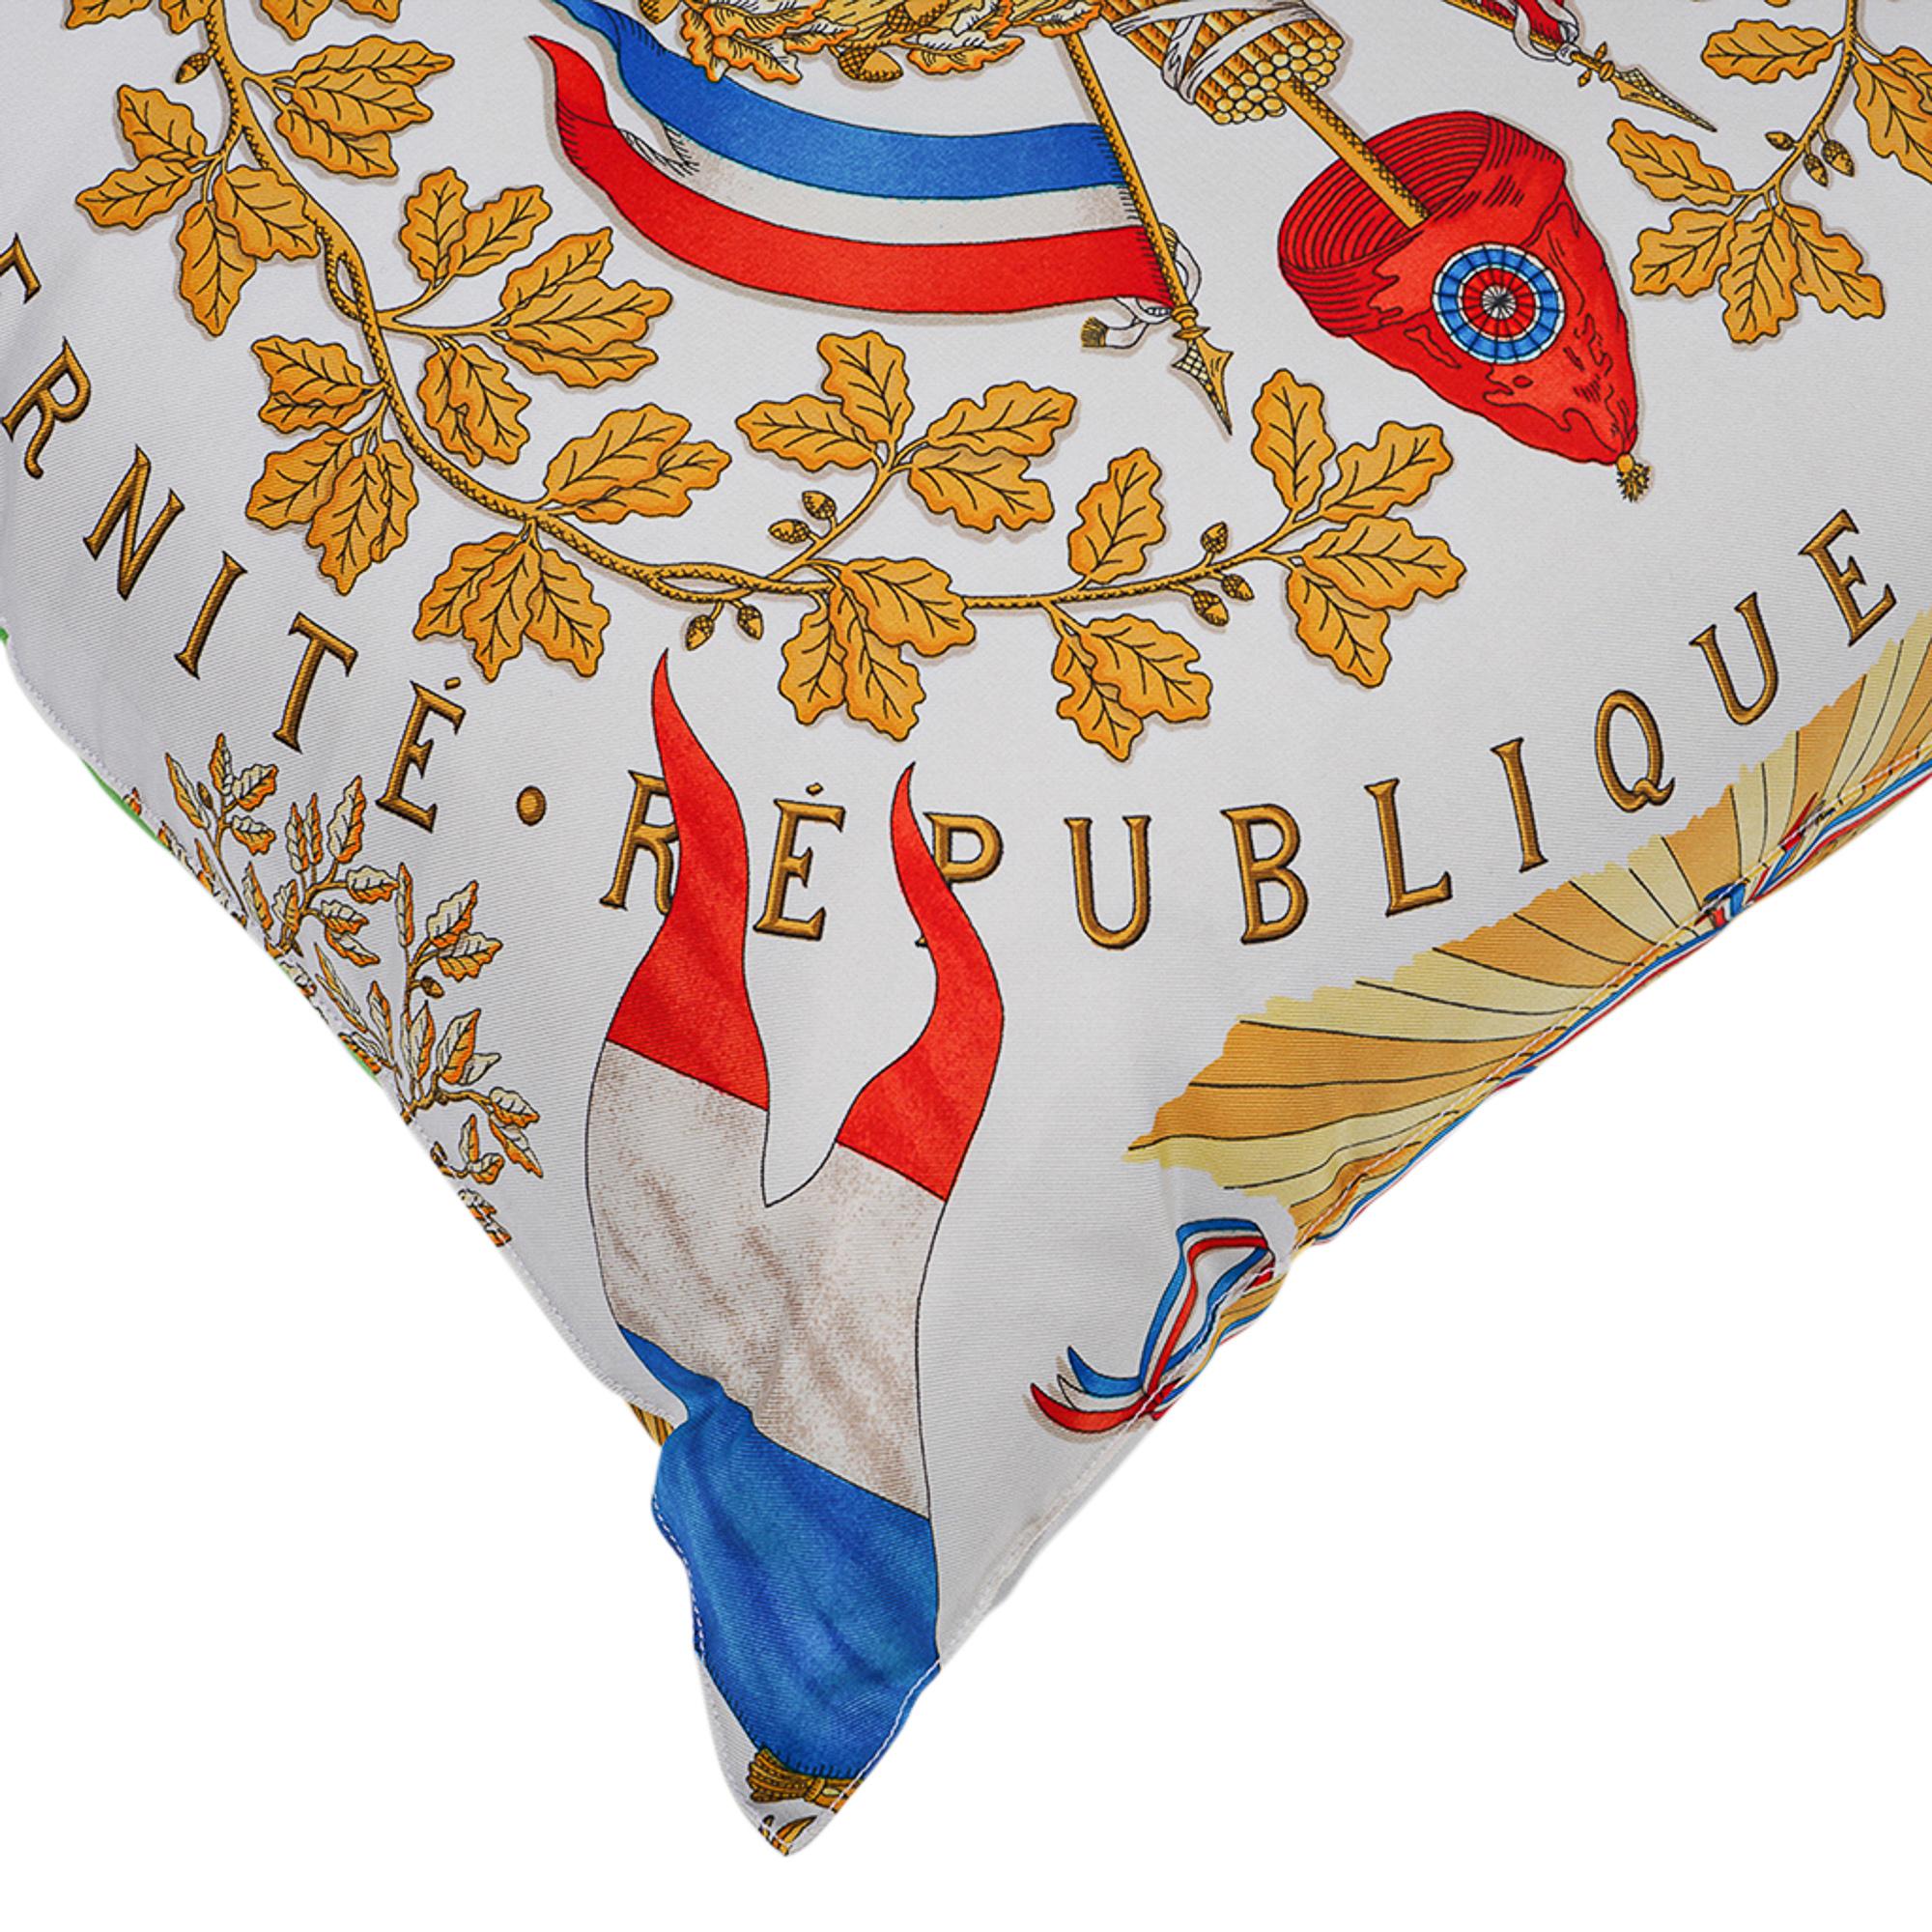 Hermes Liberte Egalite Fraternite 1789 Republique Francaise Vintage Silk Pillow In Good Condition For Sale In Miami, FL